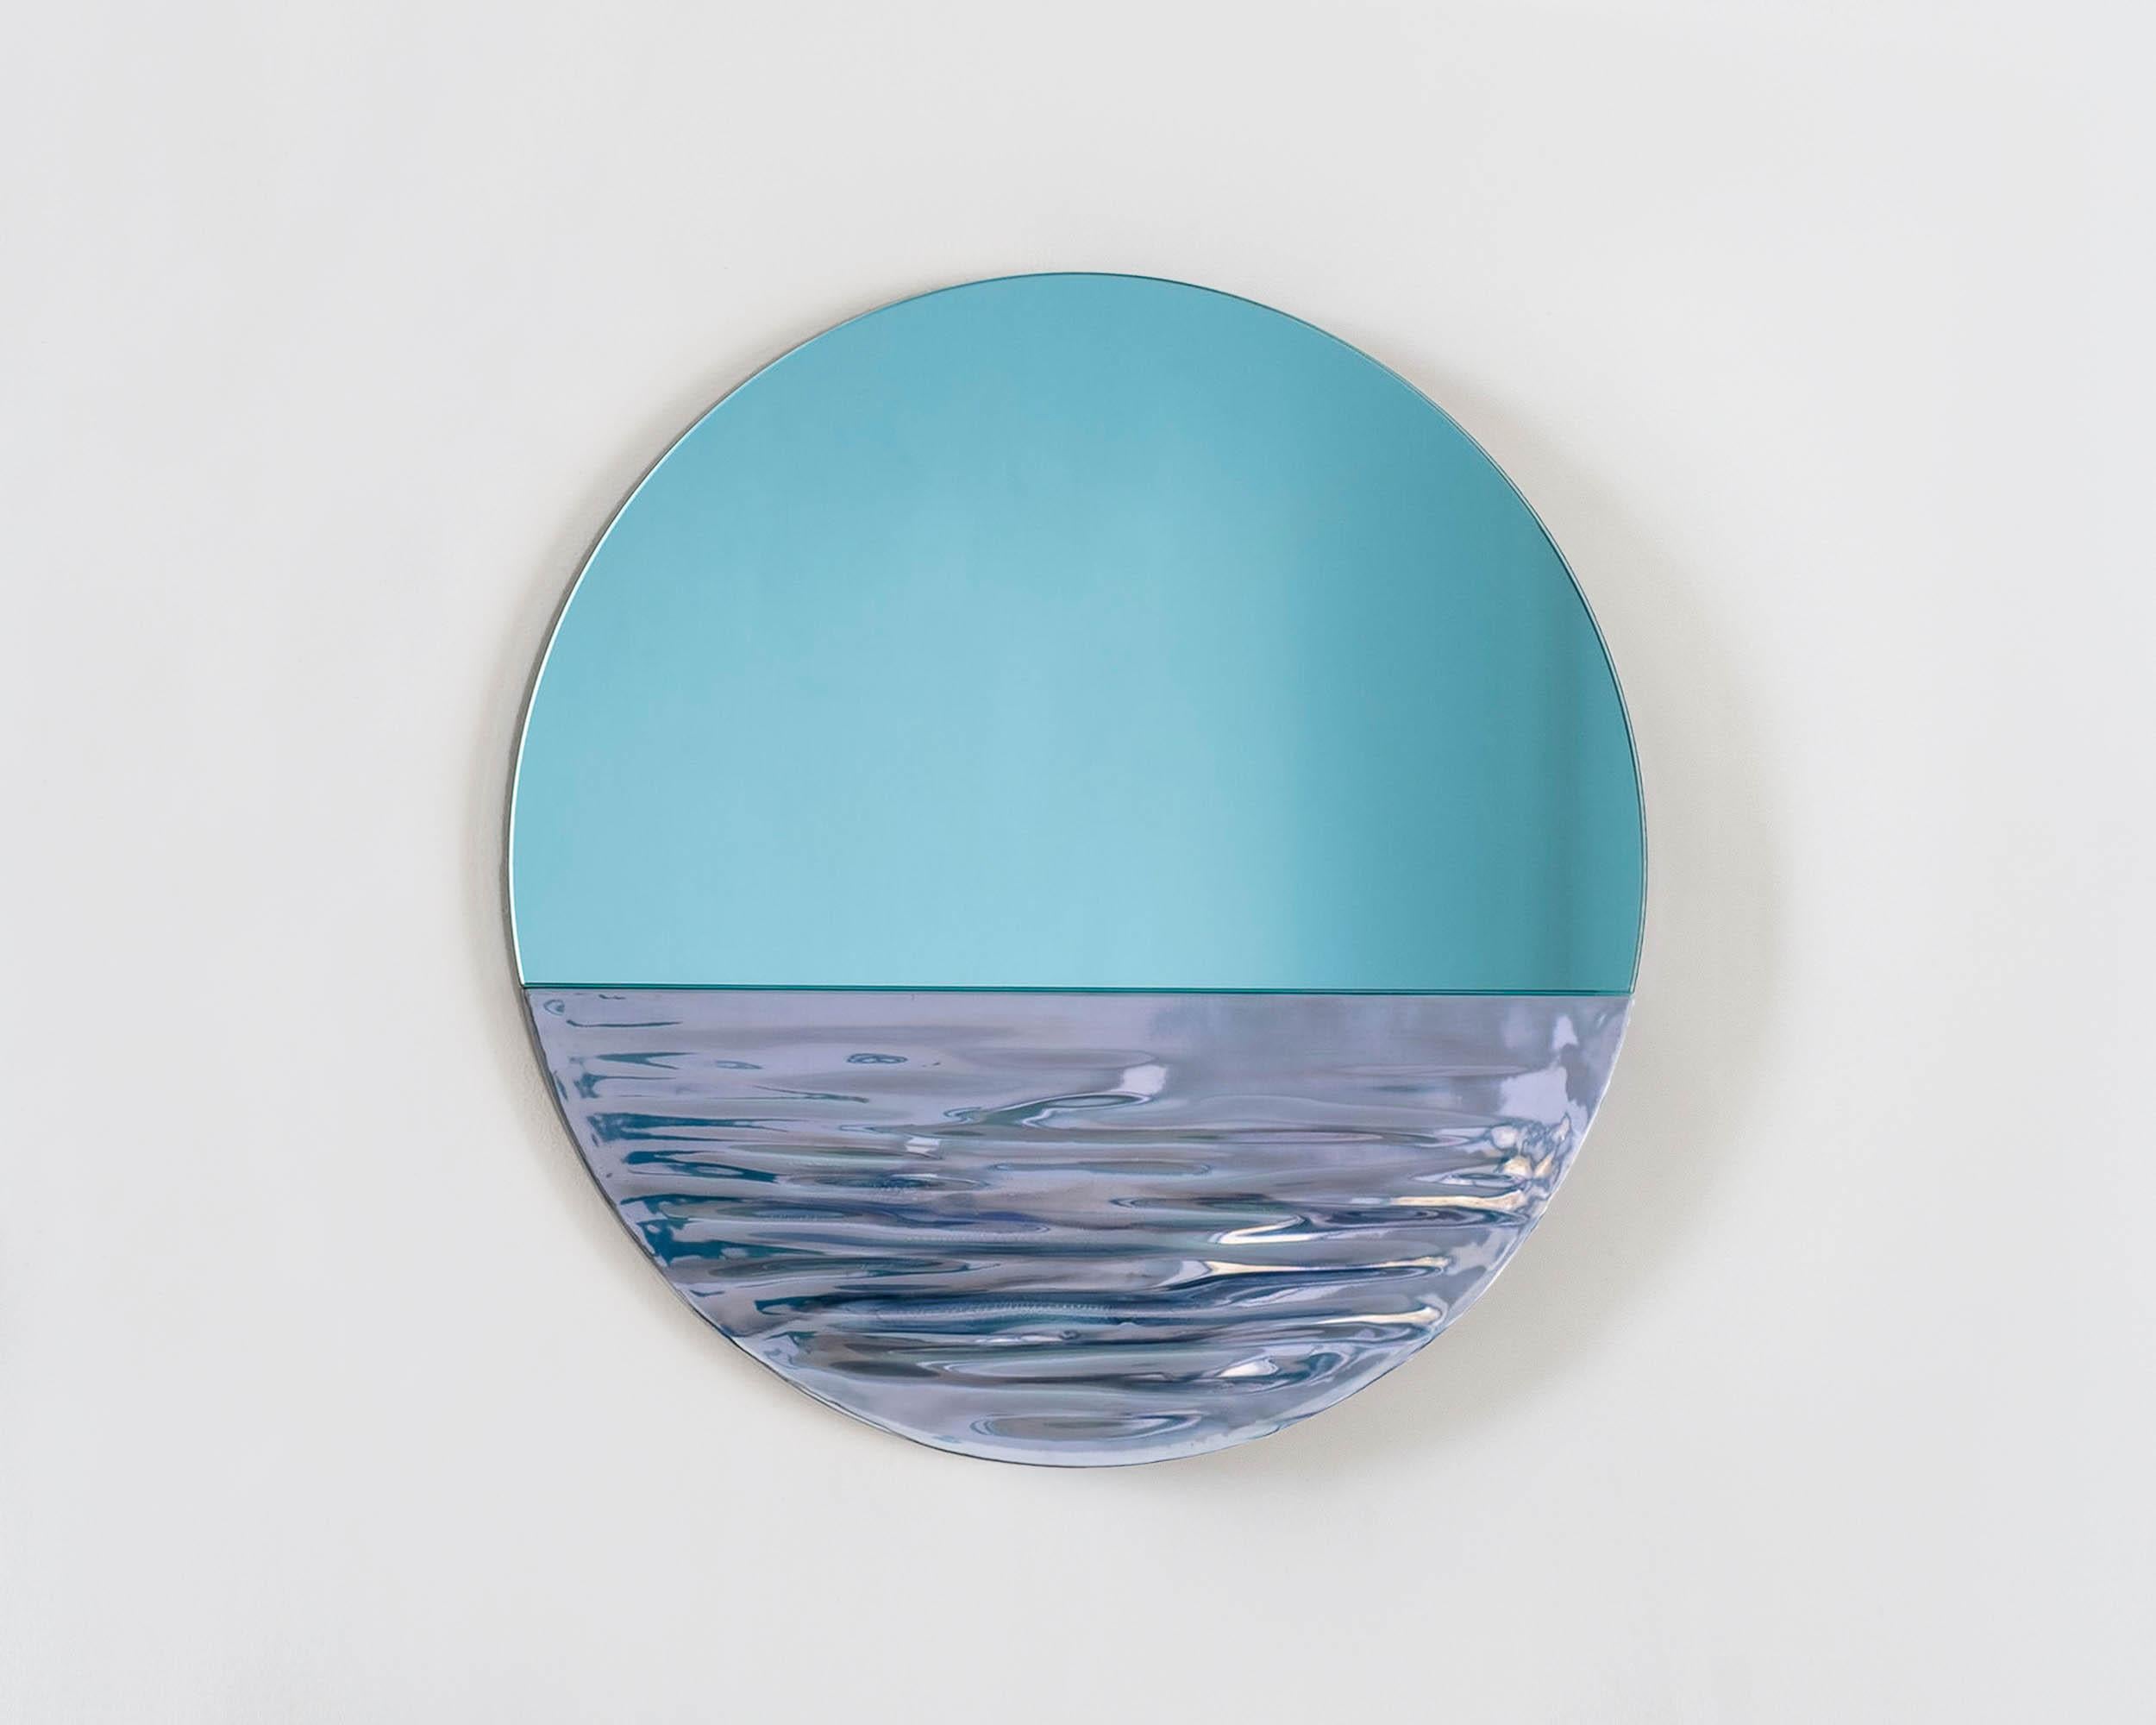 Organique Miroir rond contemporainorizon bleu vif par Ocrm « Céramique » en vente